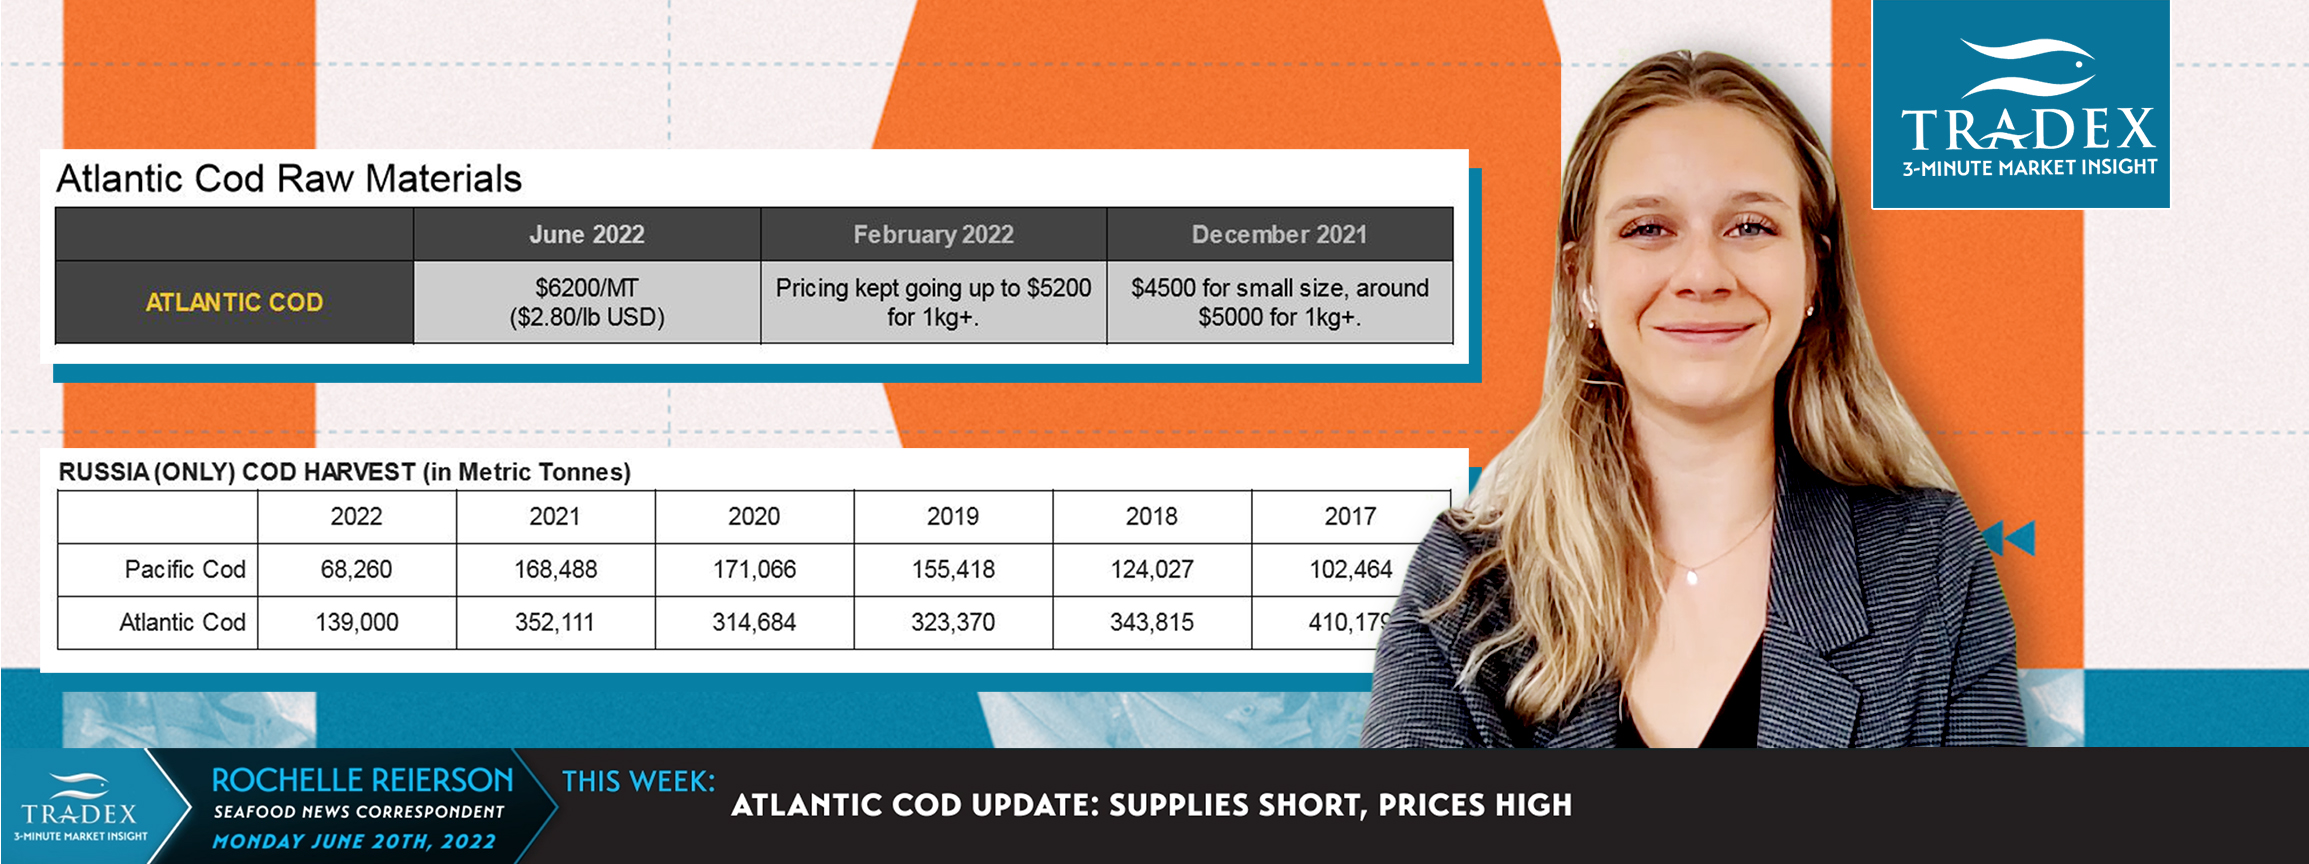 Atlantic Cod Update: Supplies Short, Prices High
